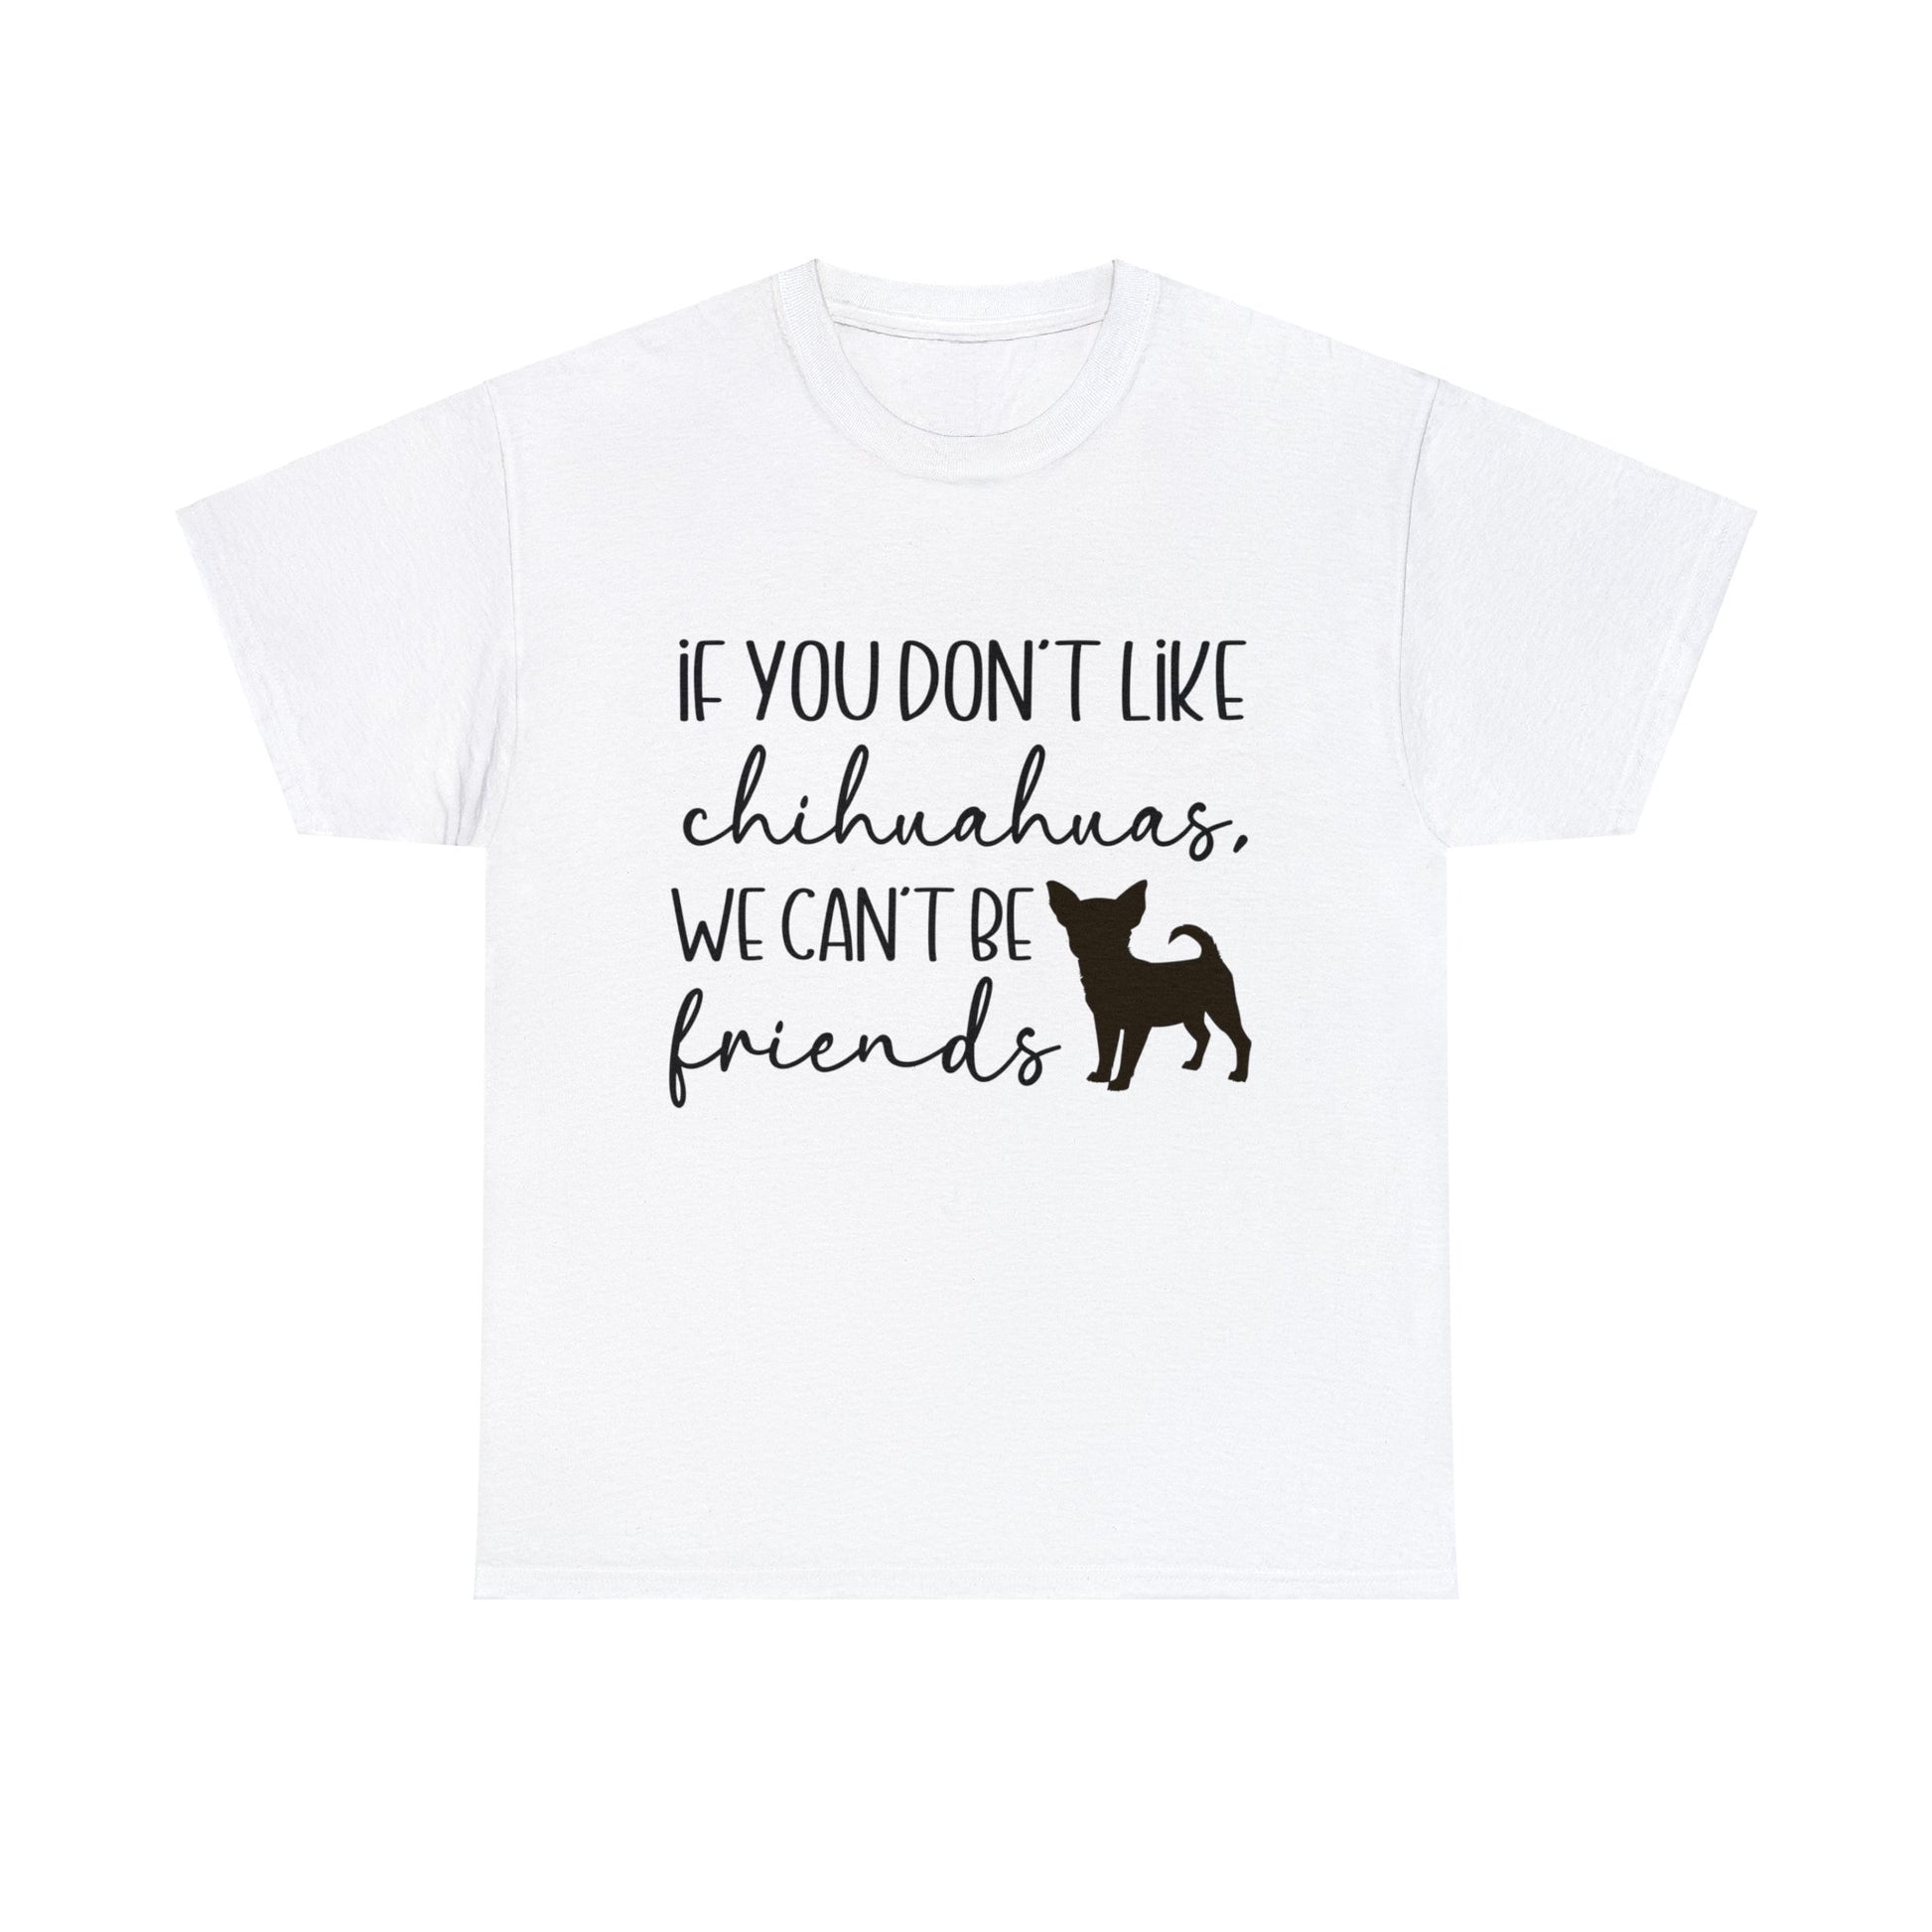 Chihuahua t-shirt